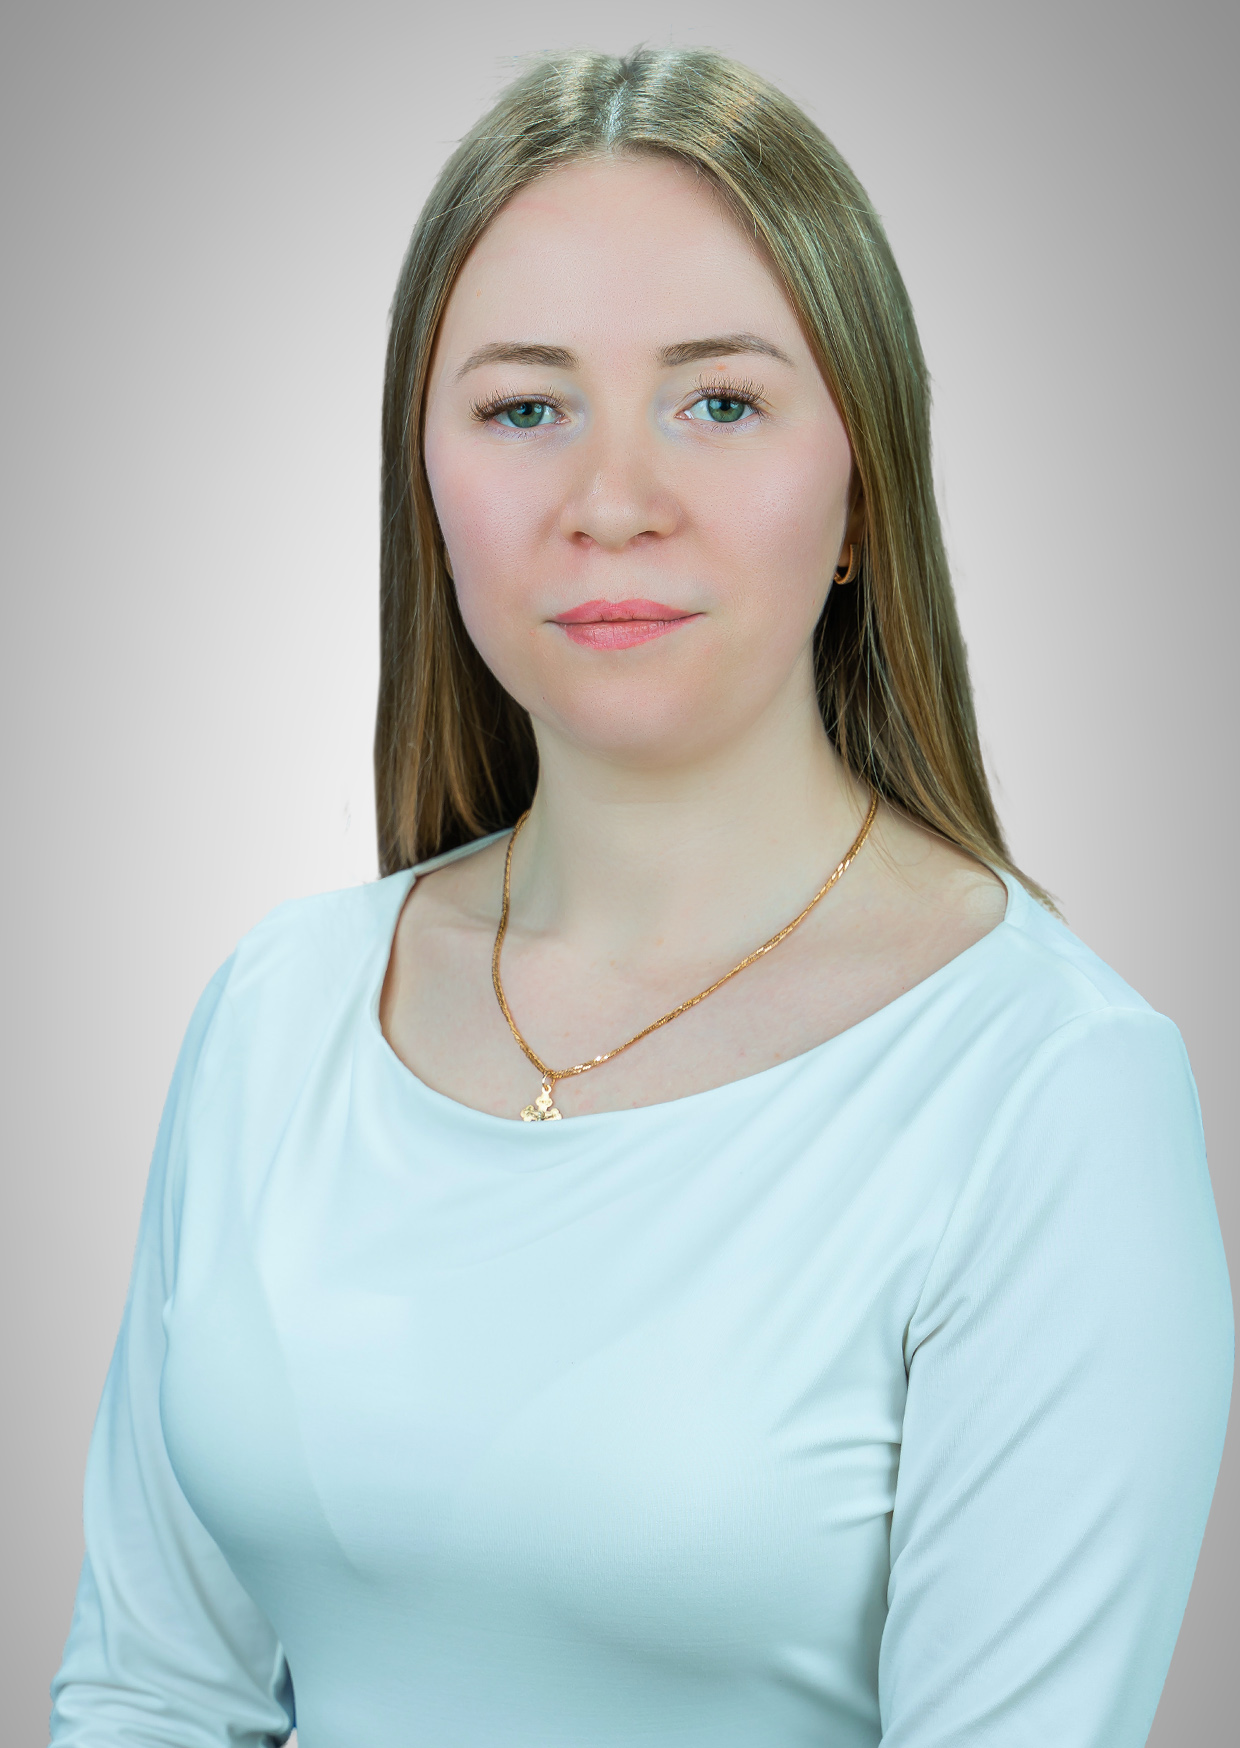 Бибанаева Кристина Владимировна